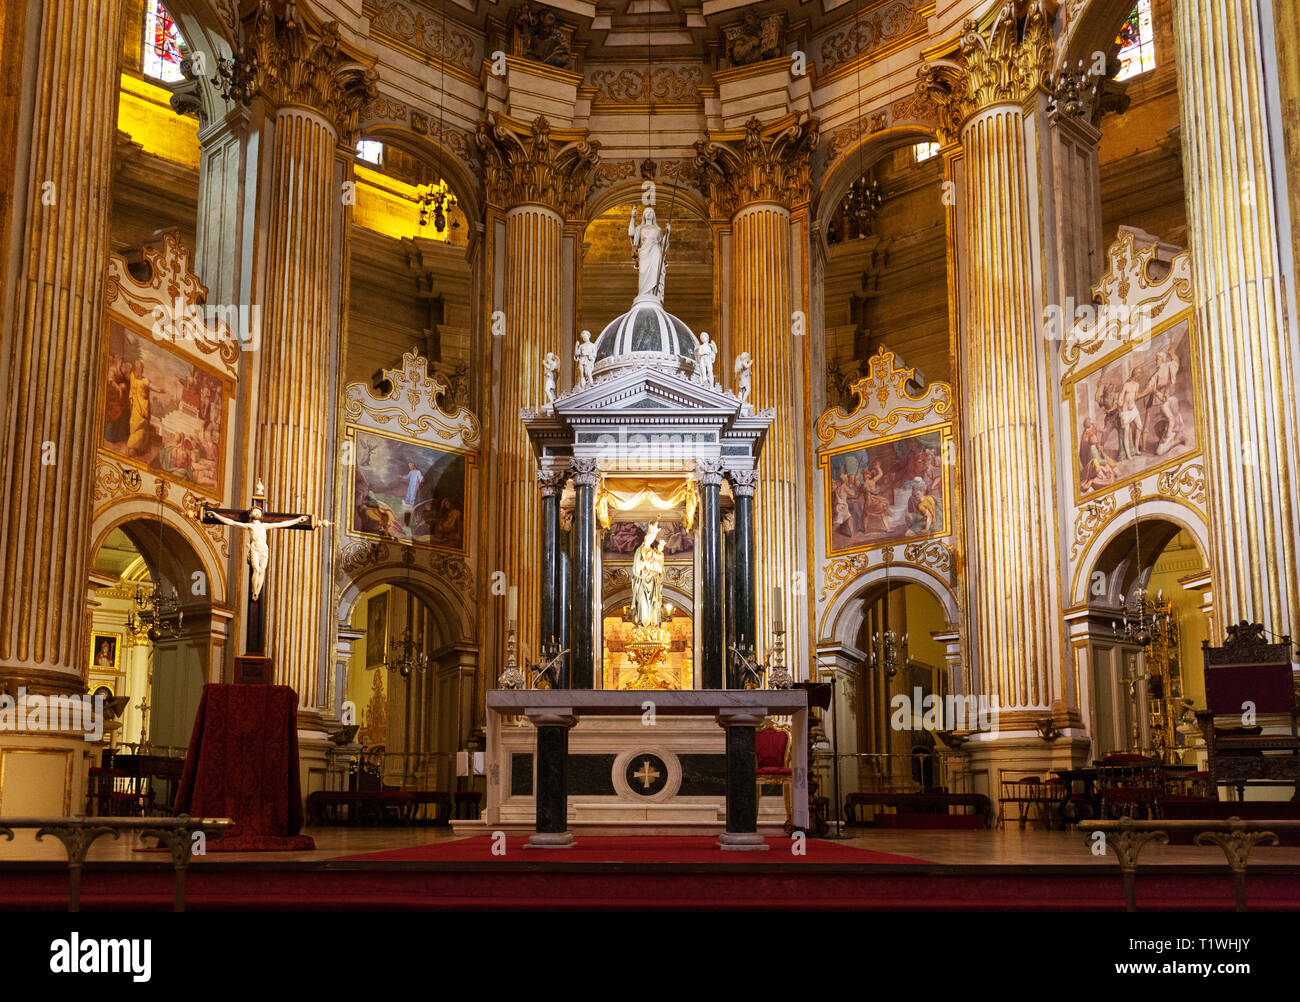 Die Kathedrale von Malaga Altar, Catedral de Malaga, Malaga Andalusien Spanien Europa Stockfoto